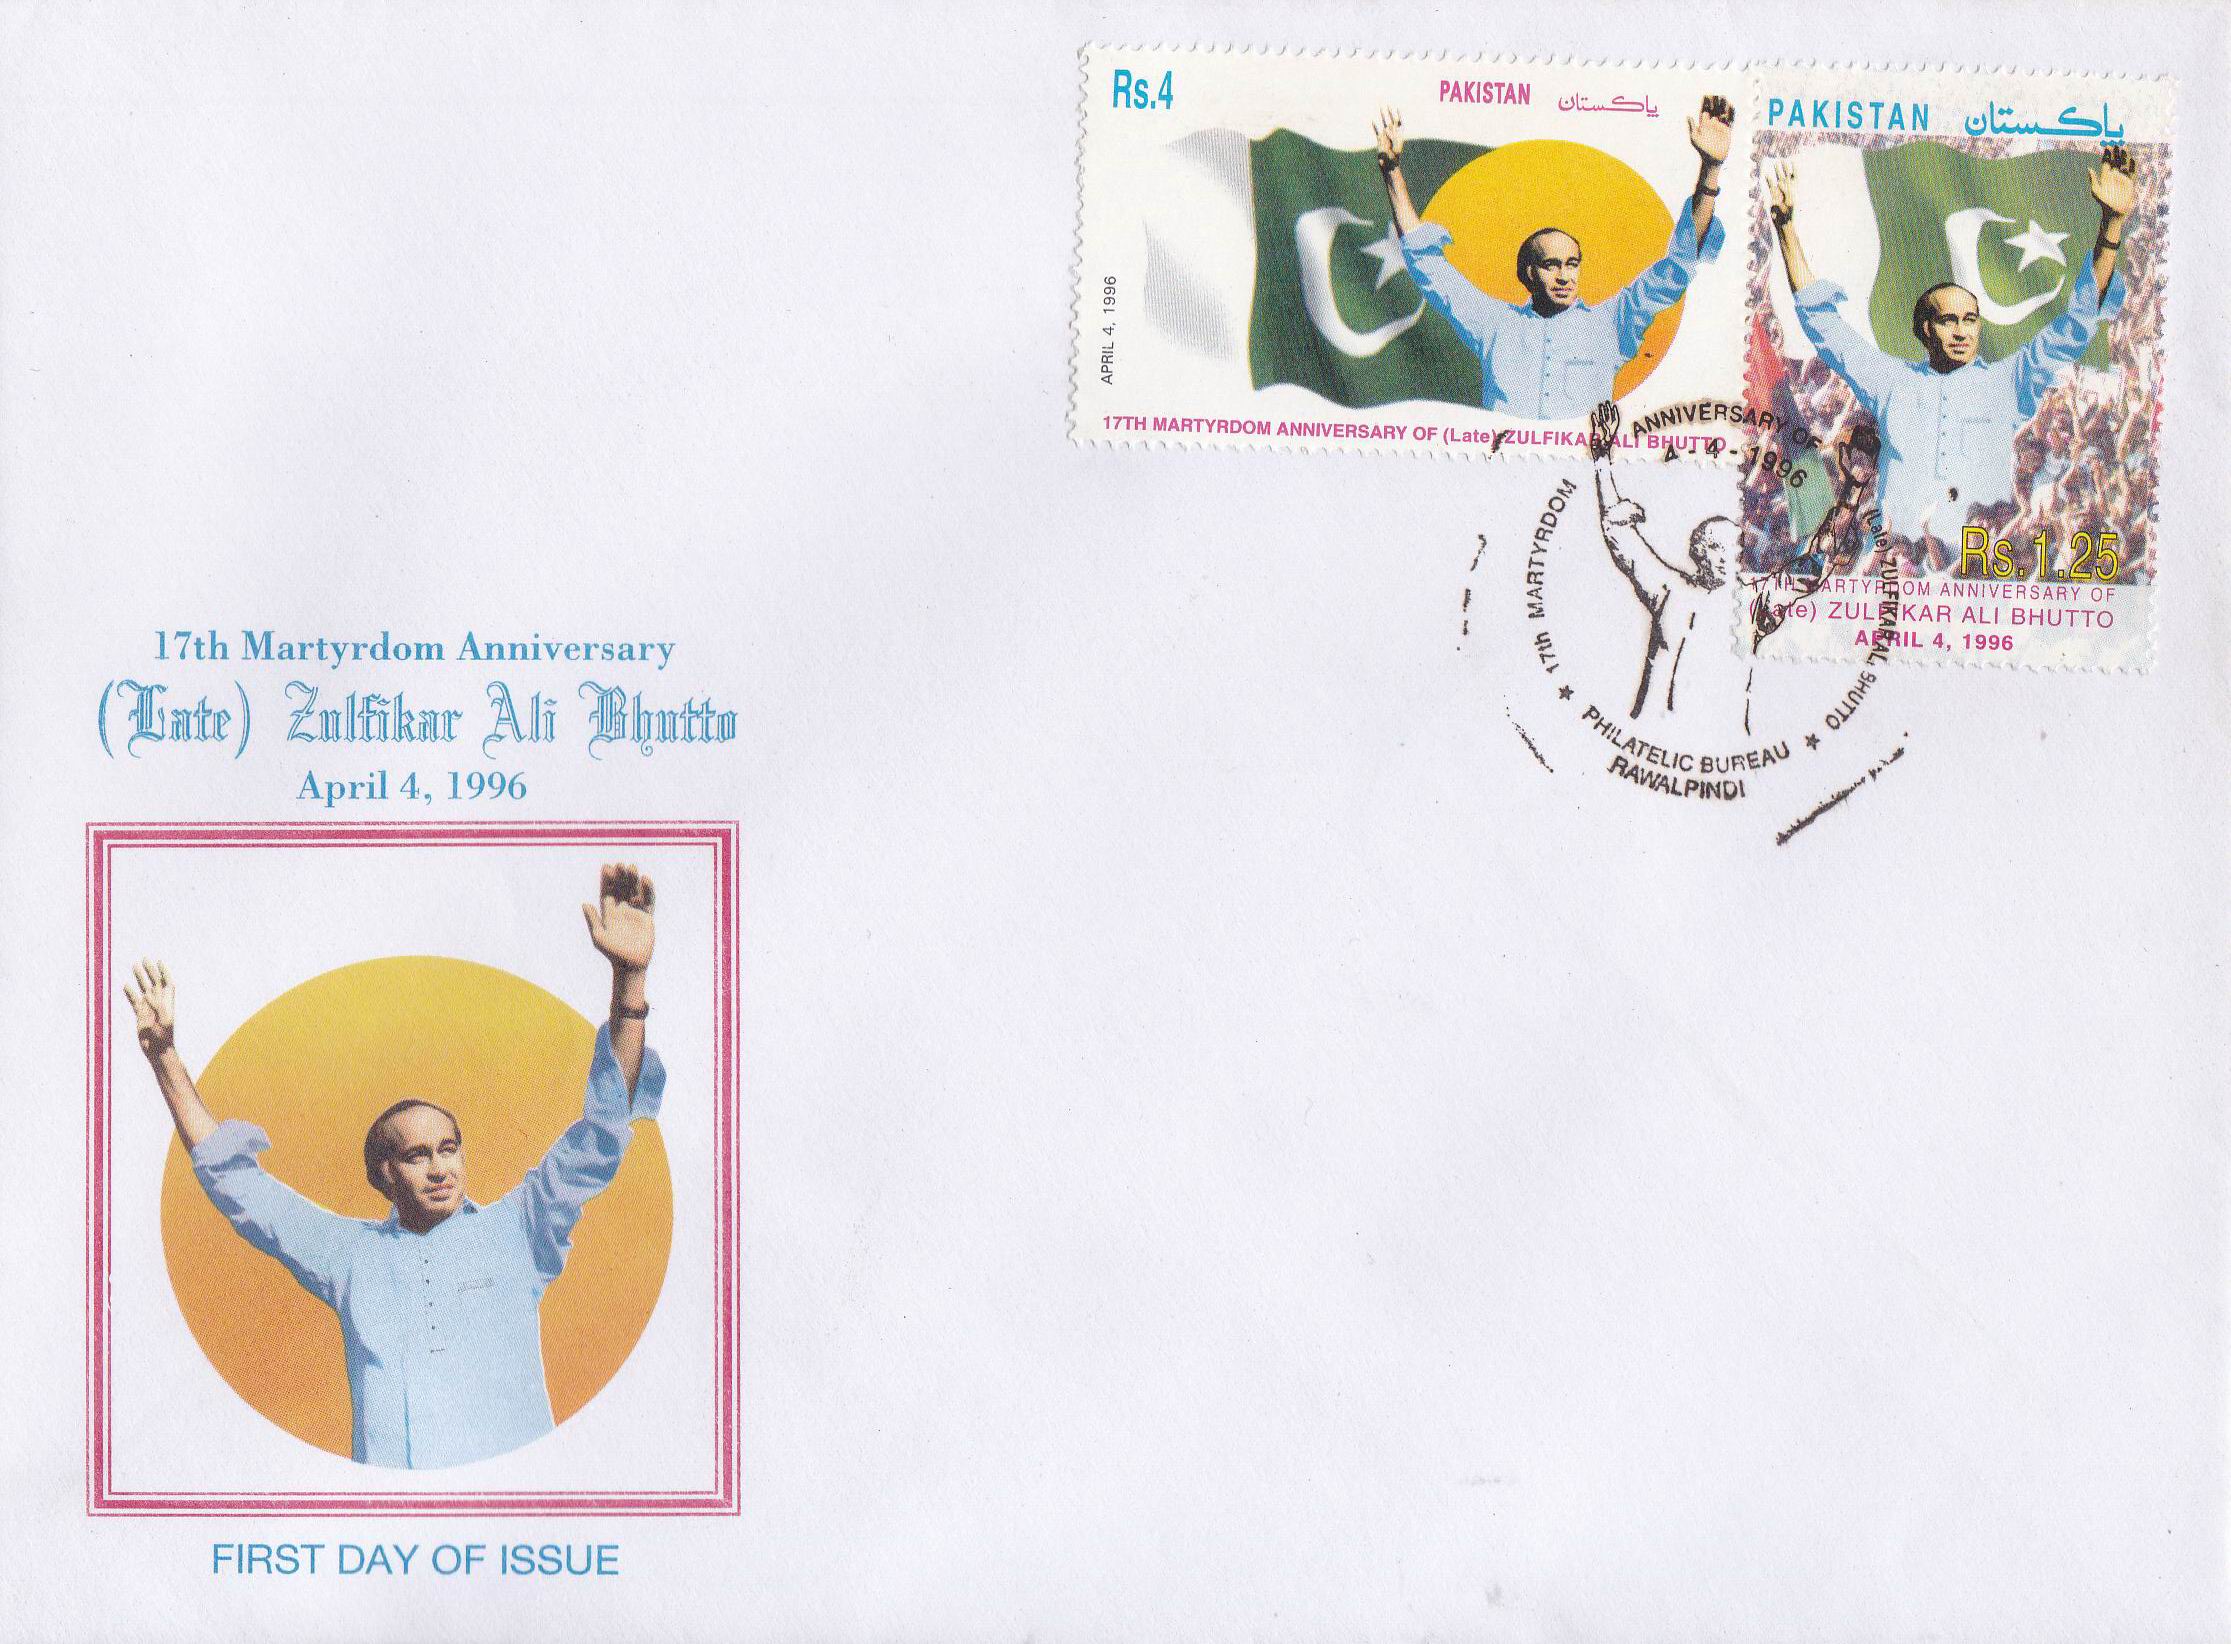 Malika e Ghazal Begum Akhtar EMI CD - Click Image to Close